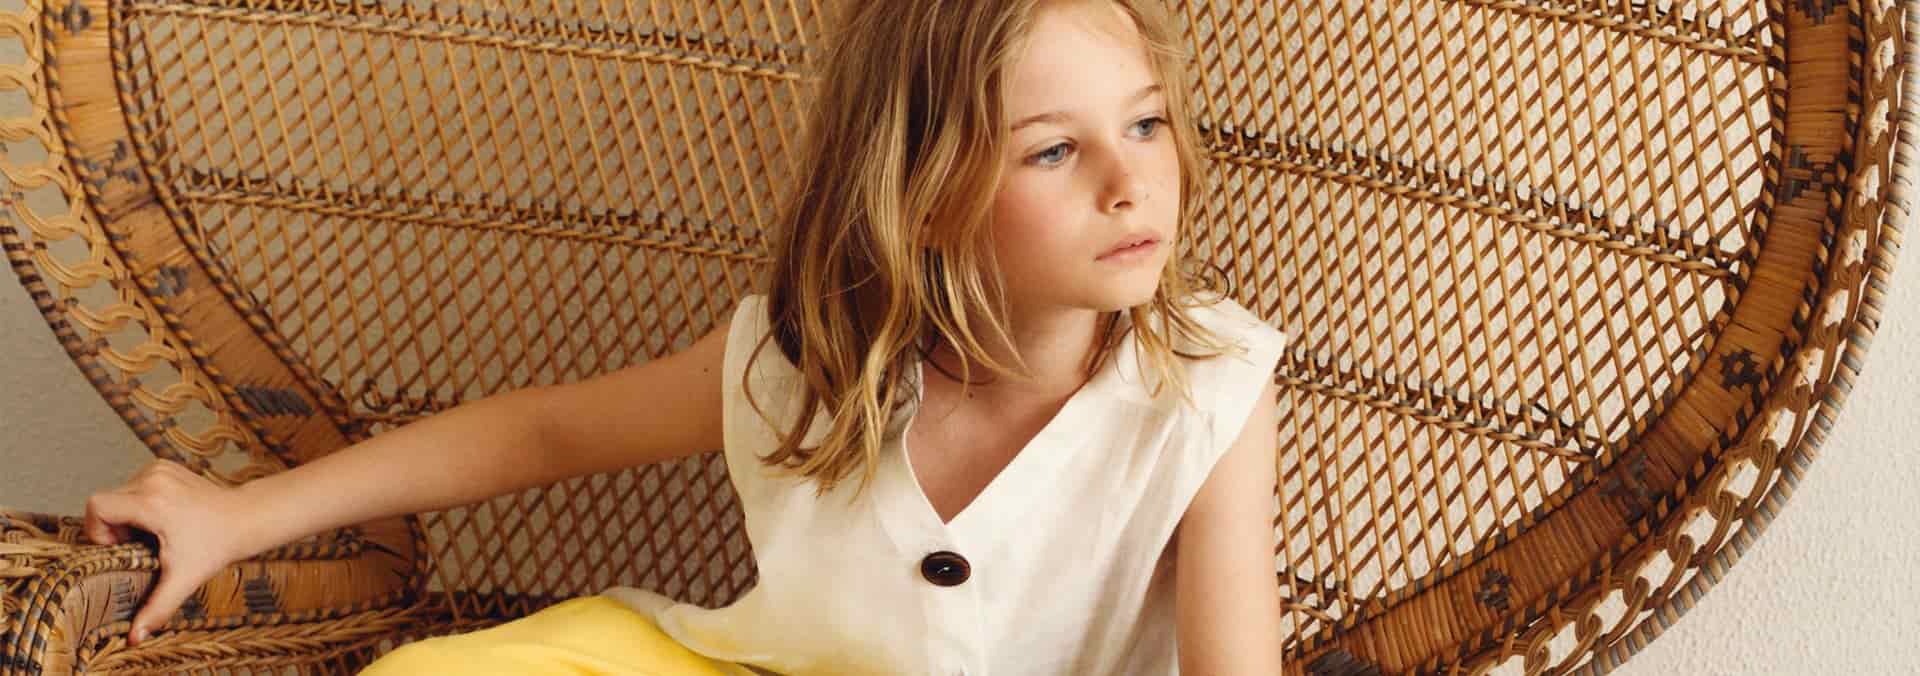 Zara - 20% OFF on Kids’ Clothing